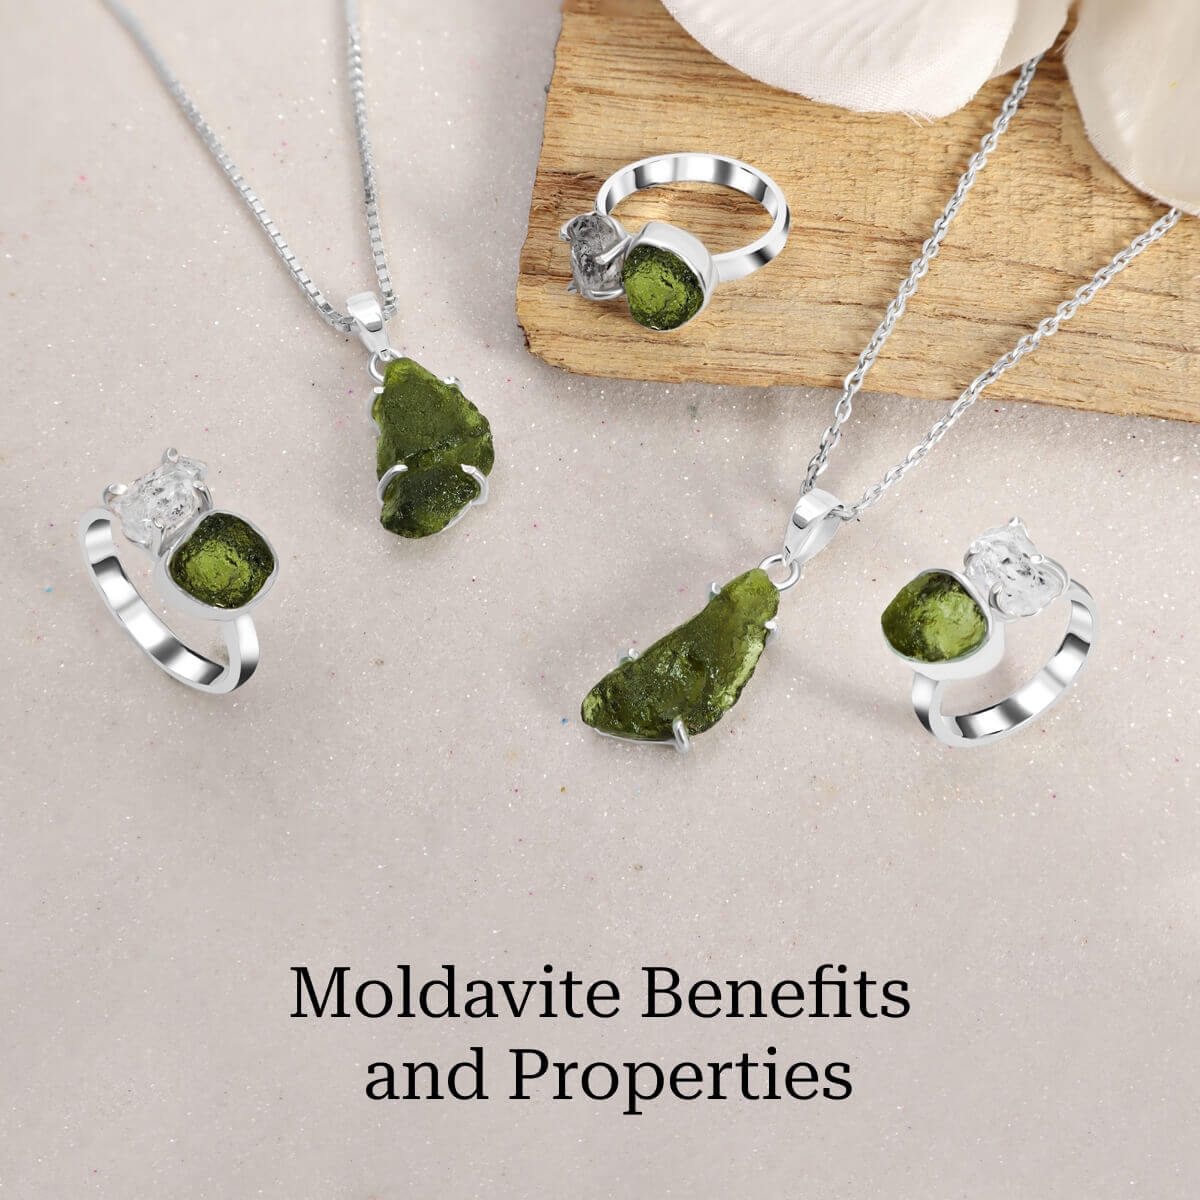 Intriguing properties and benefits of Moldavite